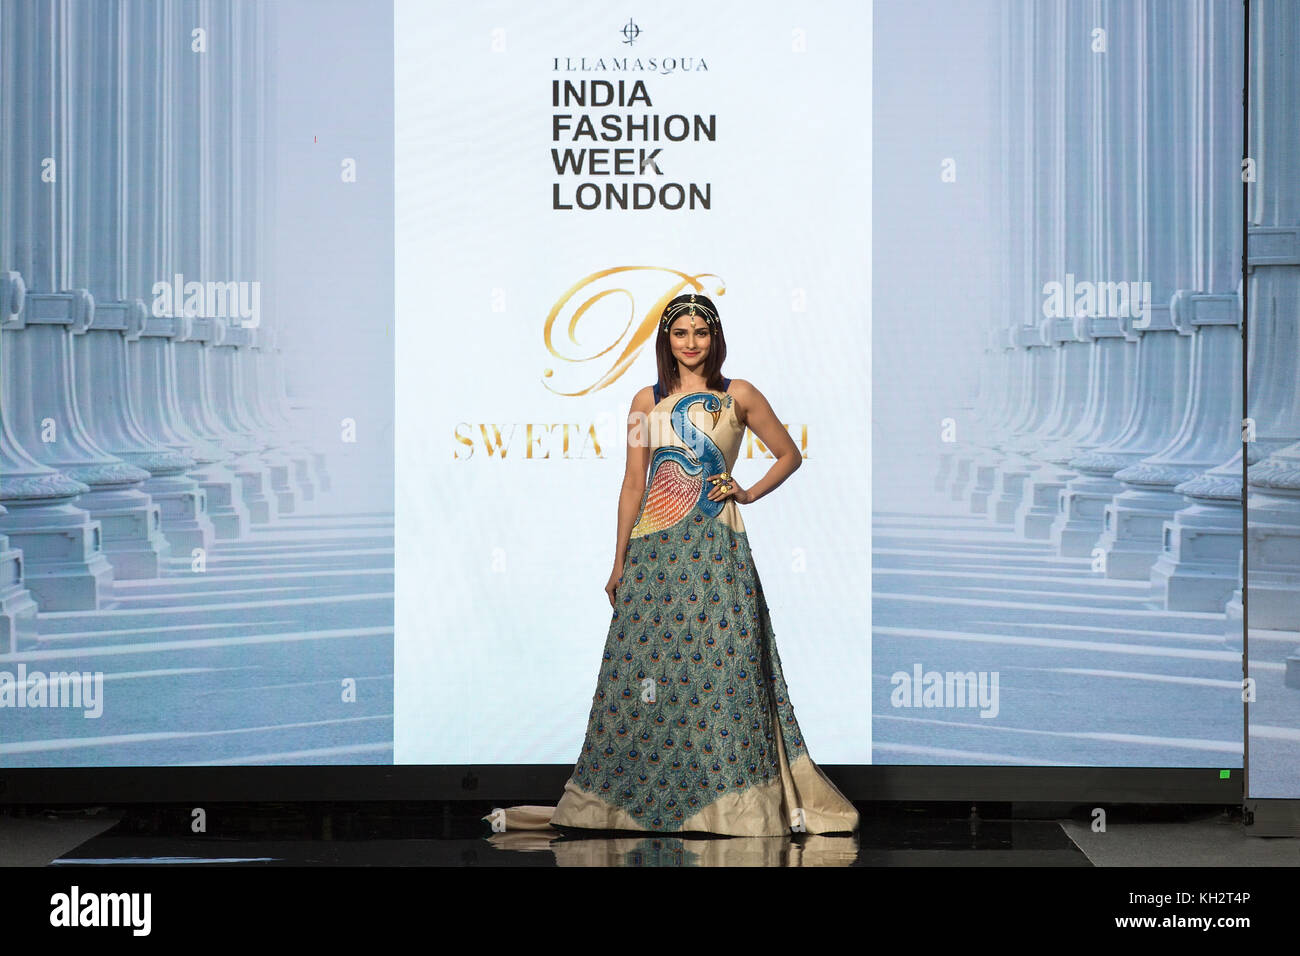 London, UK. 12th Nov, 2017. Prachi Desai, Indian Bollywood film and television actress, on the catwalk shocasing Sweta Parekh design Credit: Laura De Meo/Alamy Live News Stock Photo